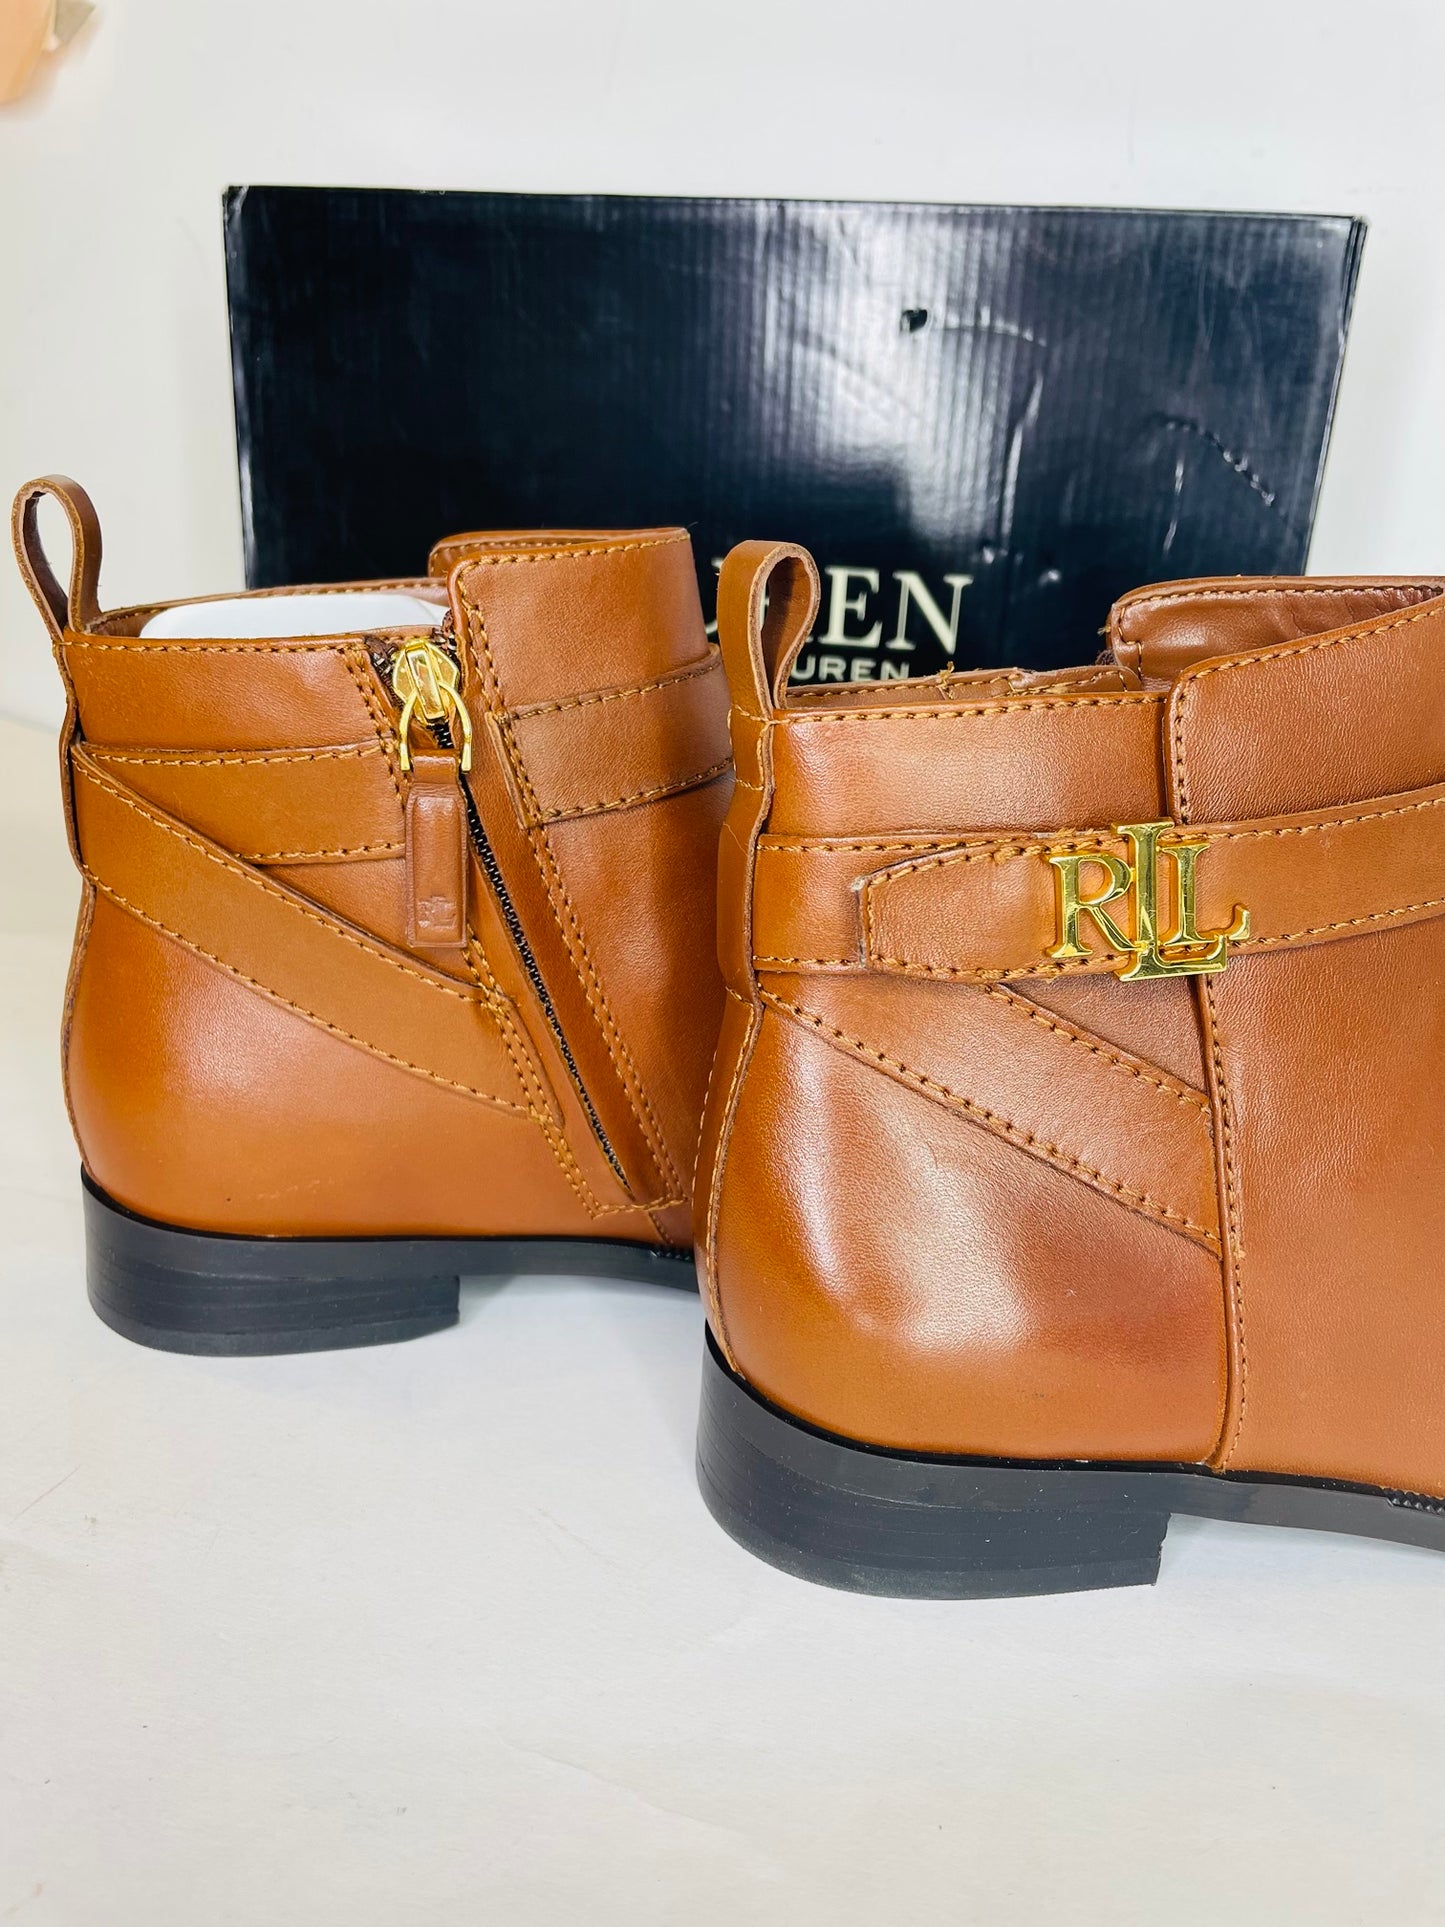 Ralph Lauren boots